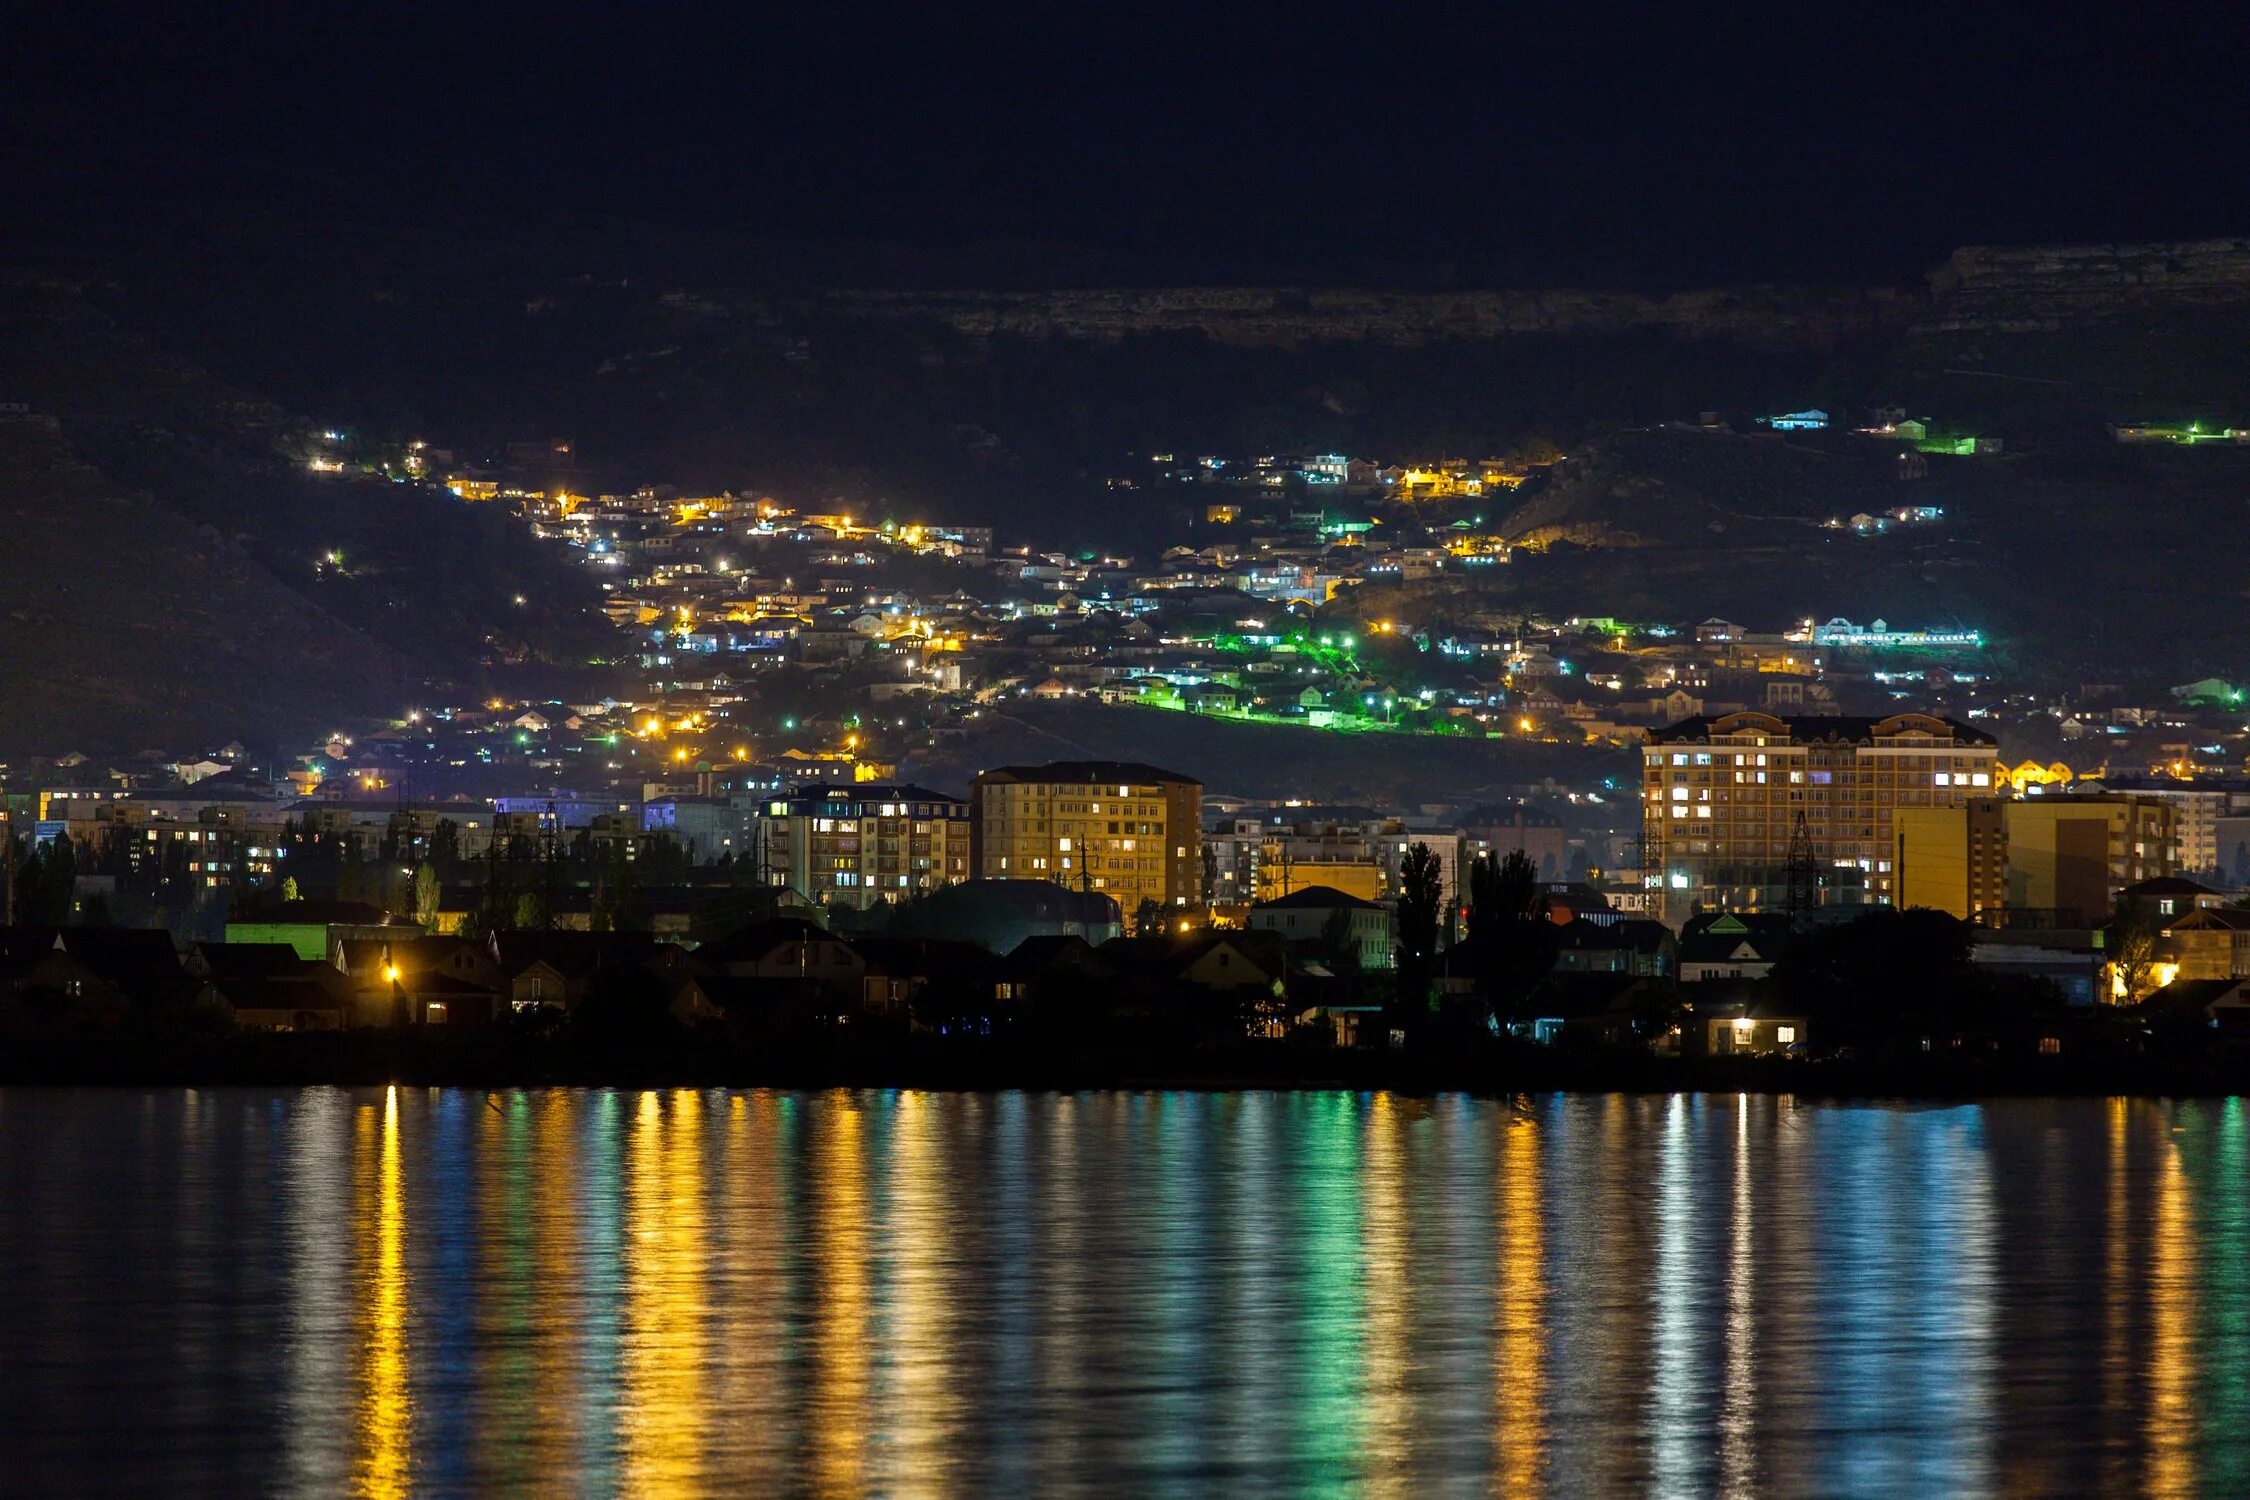 Столица Дагестана Махачкала. Дагестан озеро АК гель Махачкала. Озеро АК-гель в Махачкале. Парк Акгель Махачкала ночью.